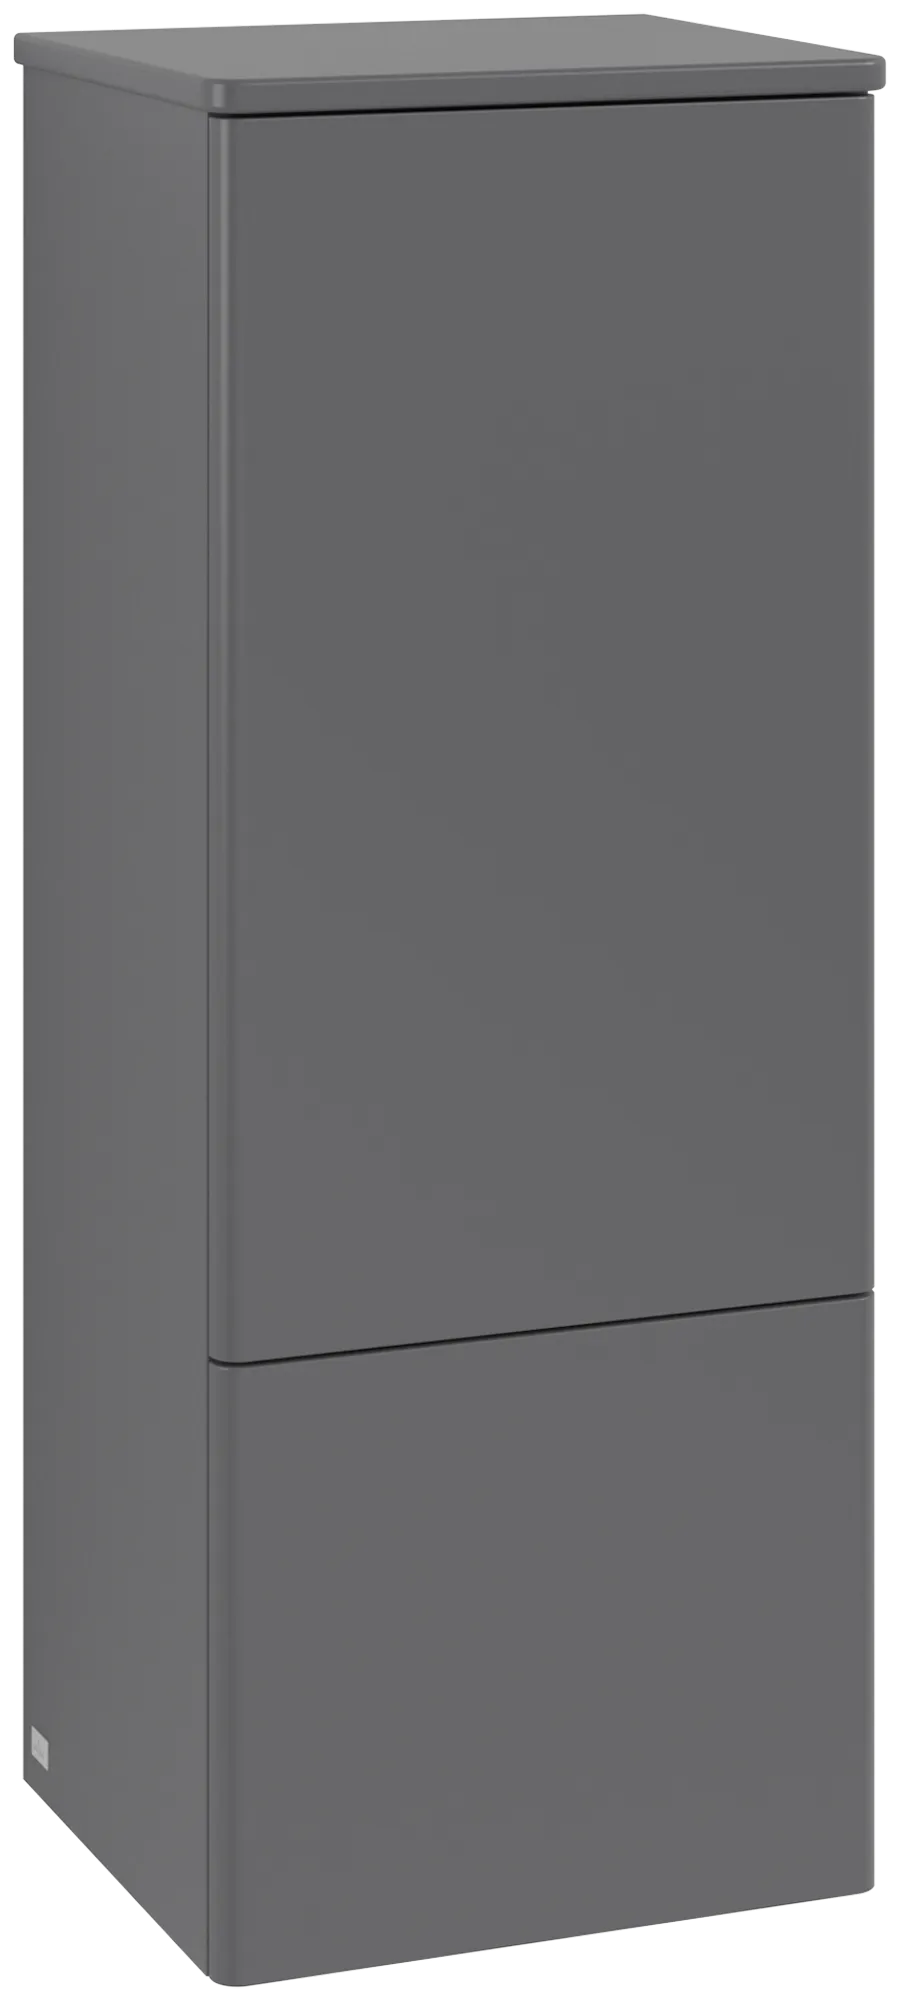 VILLEROY BOCH Antao Medium-height cabinet, with lighting, 1 door, 414 x 1039 x 356 mm, Front without structure, Anthracite Matt Lacquer / Anthracite Matt Lacquer #L44000GK resmi